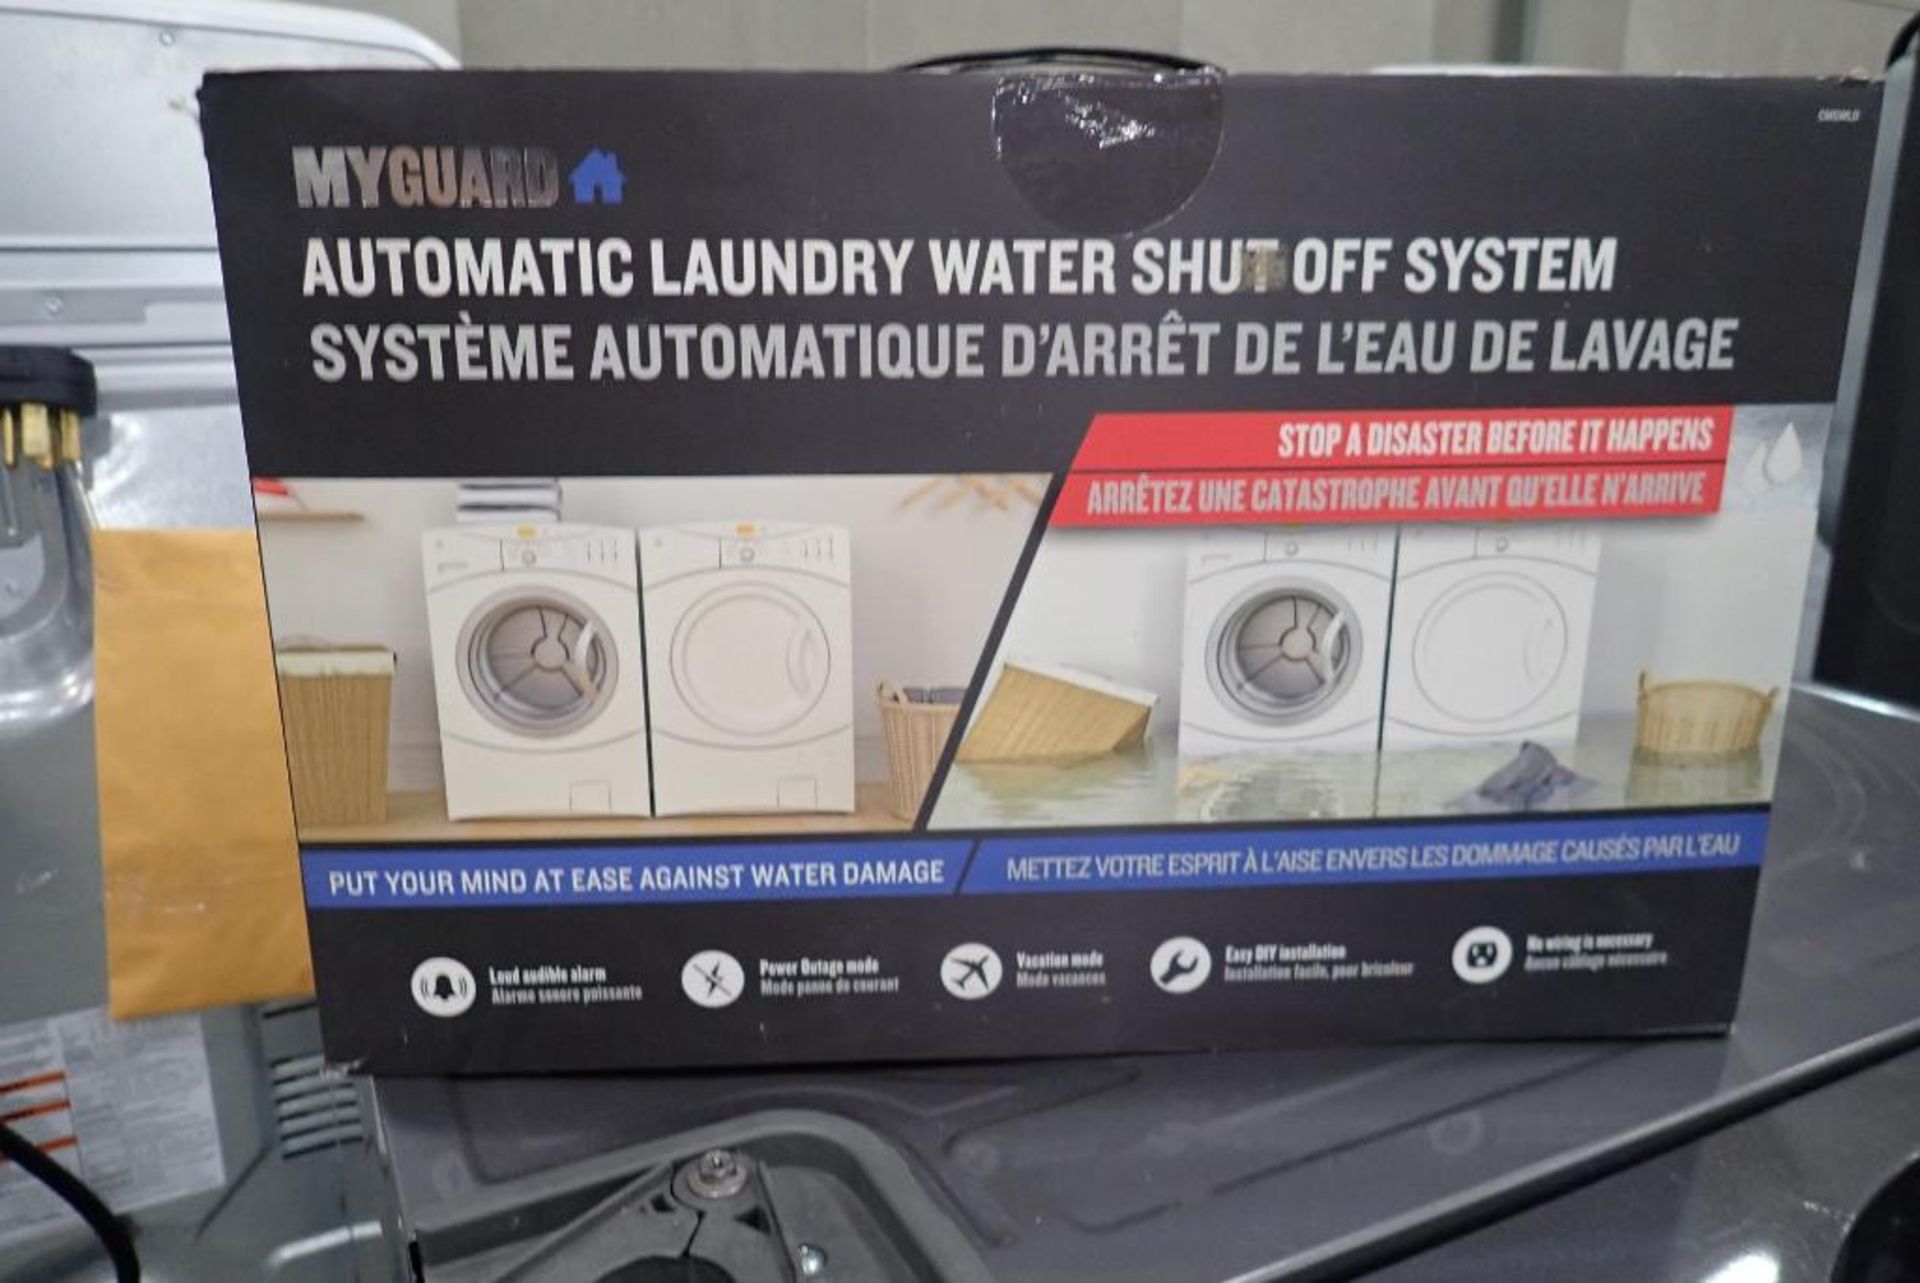 Myguard Automatic Laundry Water Shut Off System.